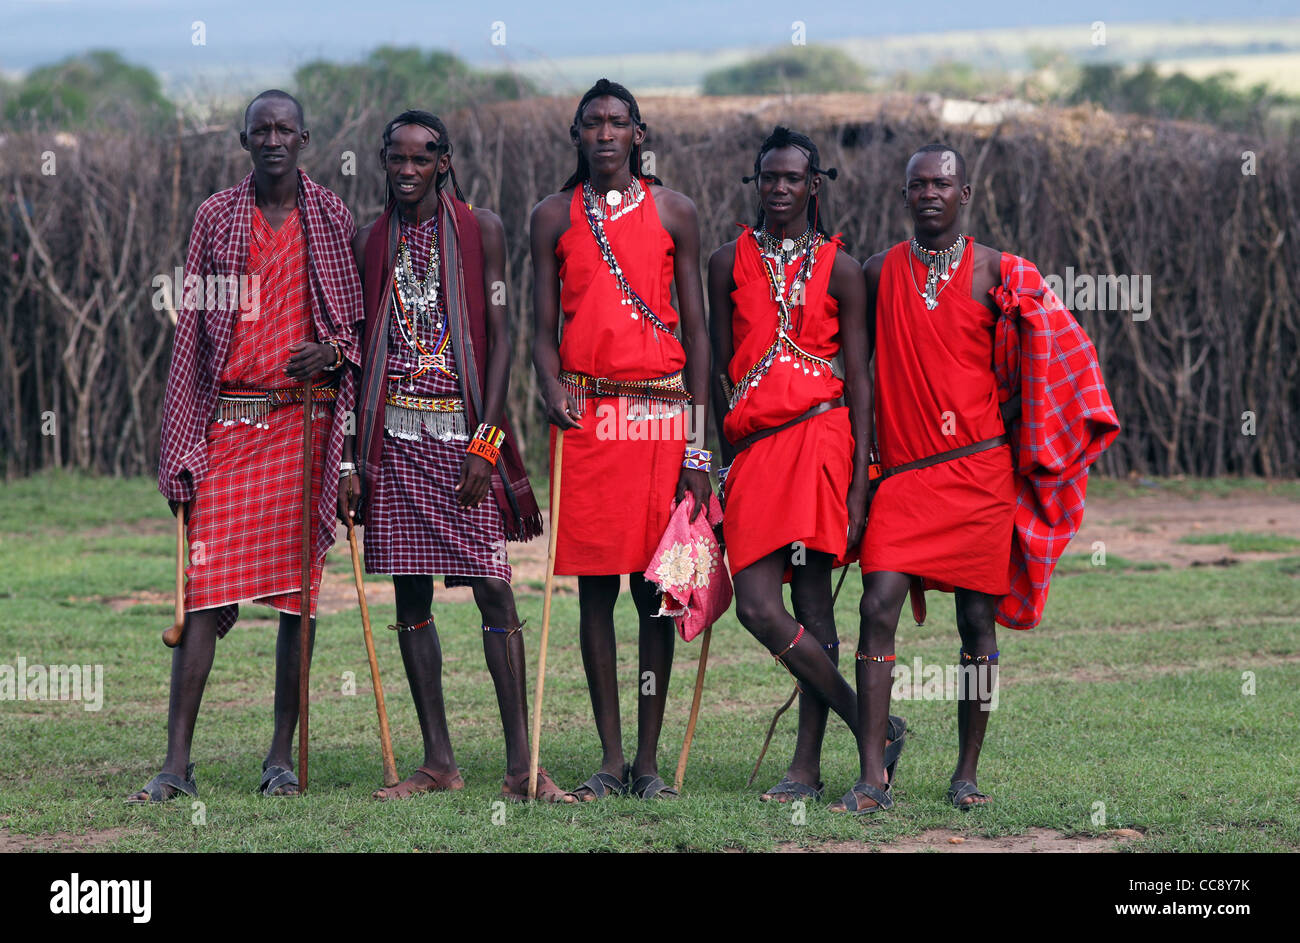 Masai men in traditional dress by their village perimeter fence, Masai Mara, Kenya, East Africa. 2/2/2009. Photograph: Stuart Boulton/Alamy Stock Photo